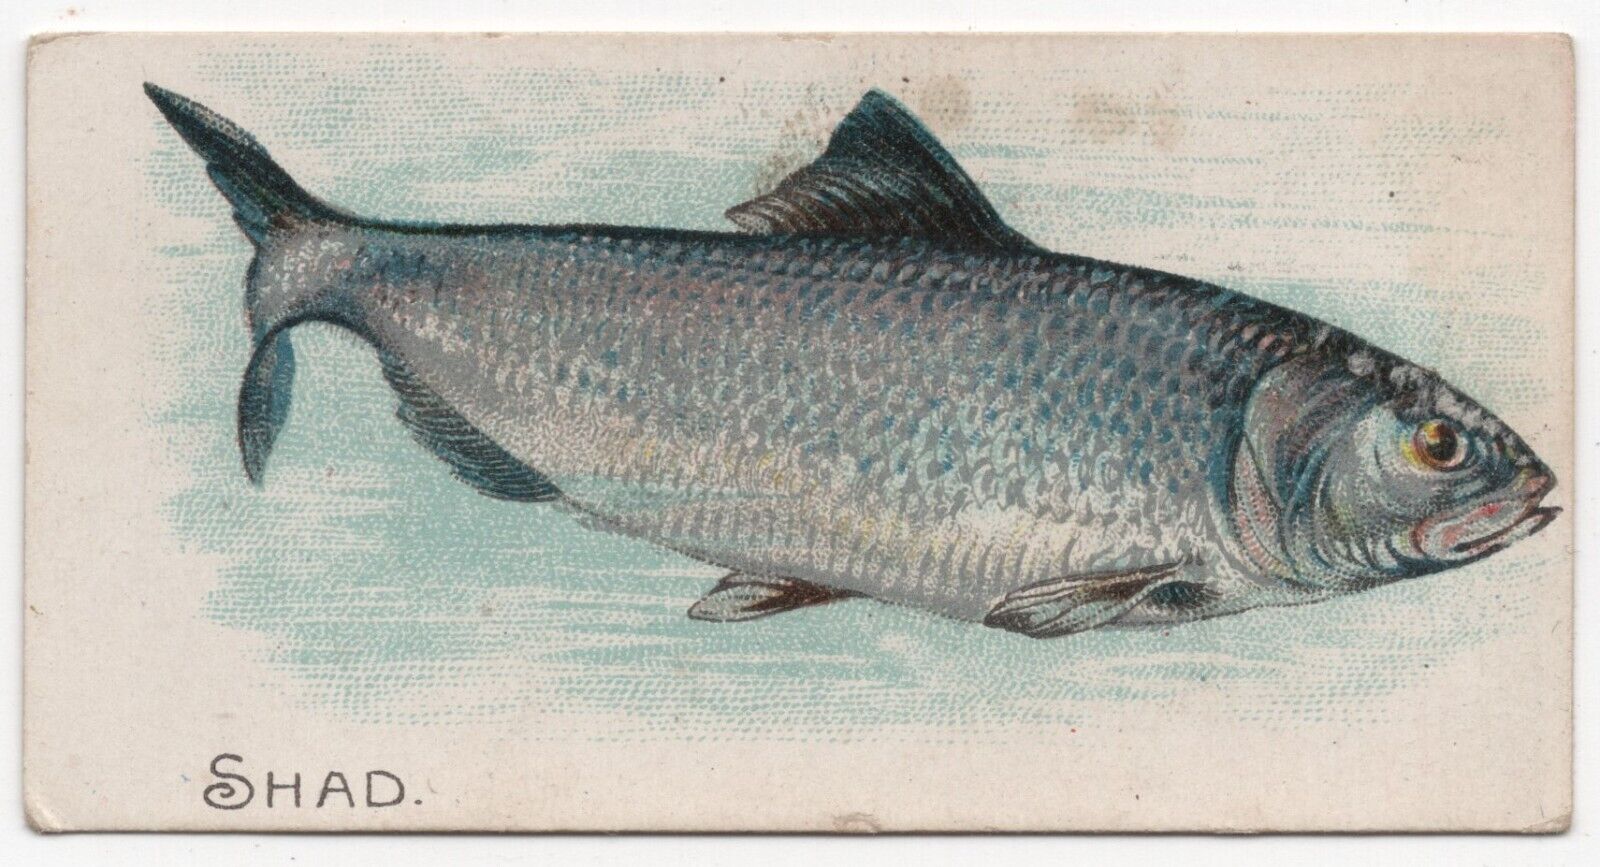 1920s Shad Fish Card E32 Philadelphia Caramels Like Allen & Ginter N8 Tobacco